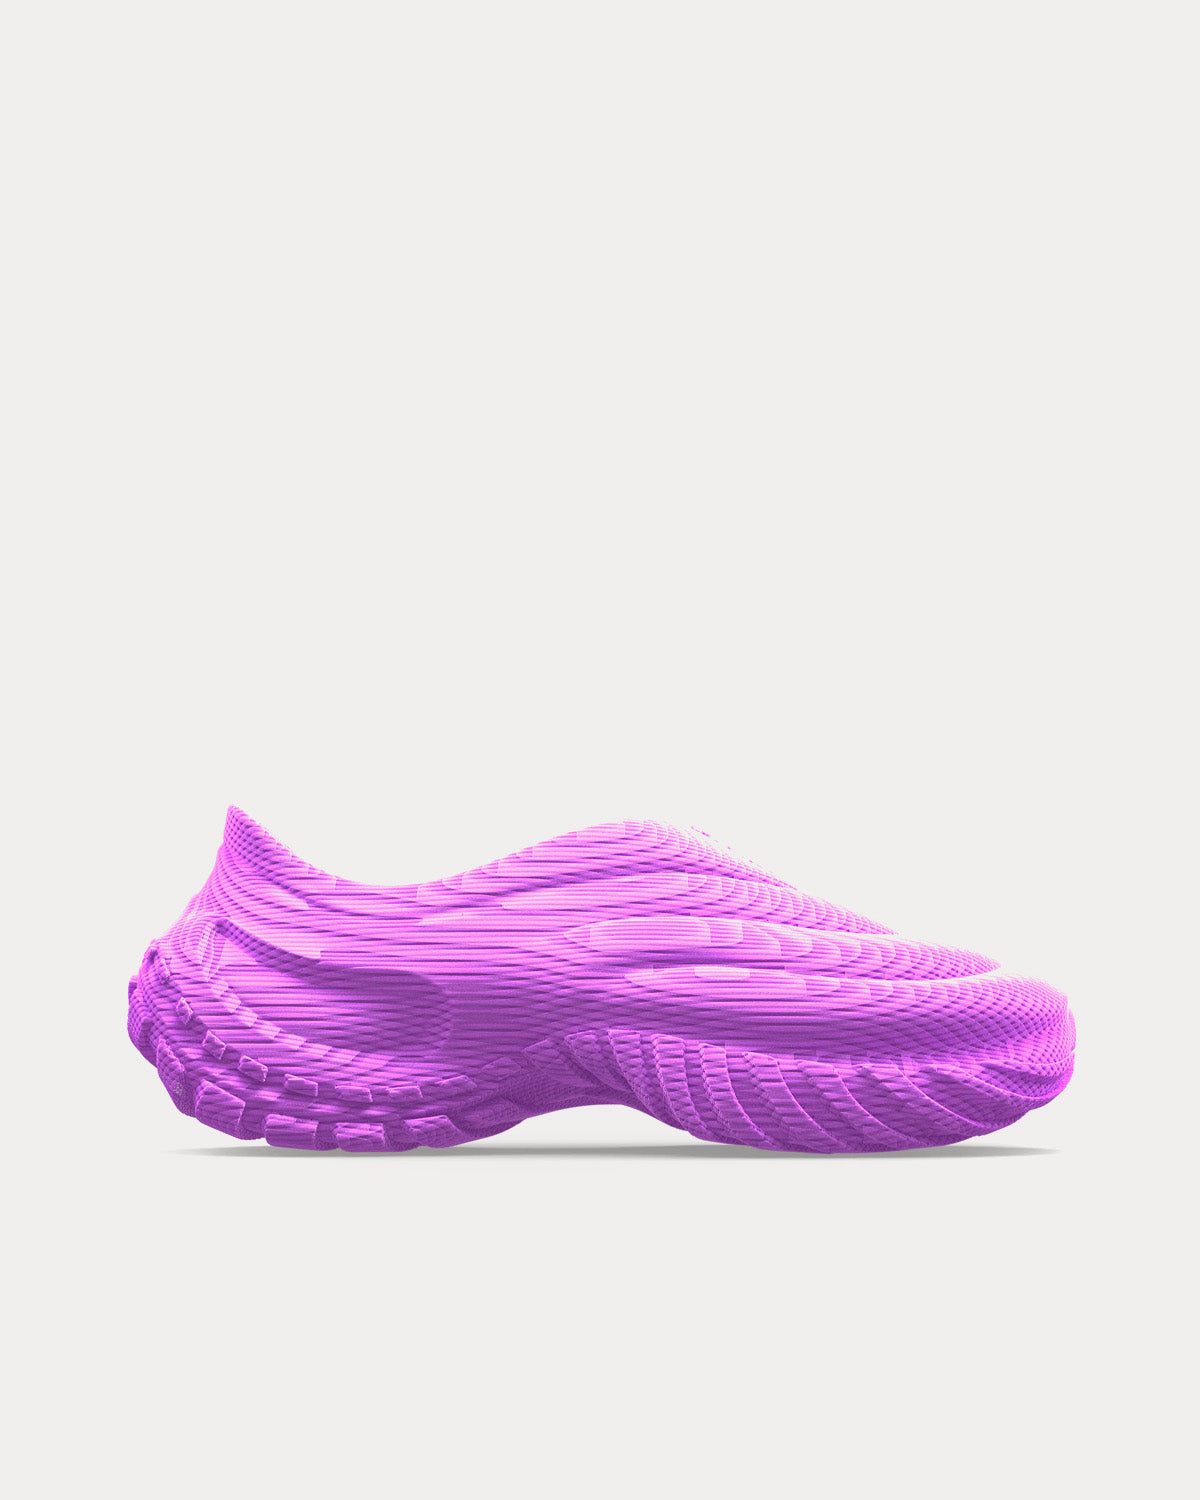 MLLN - Próta Purple Slip On Sneakers